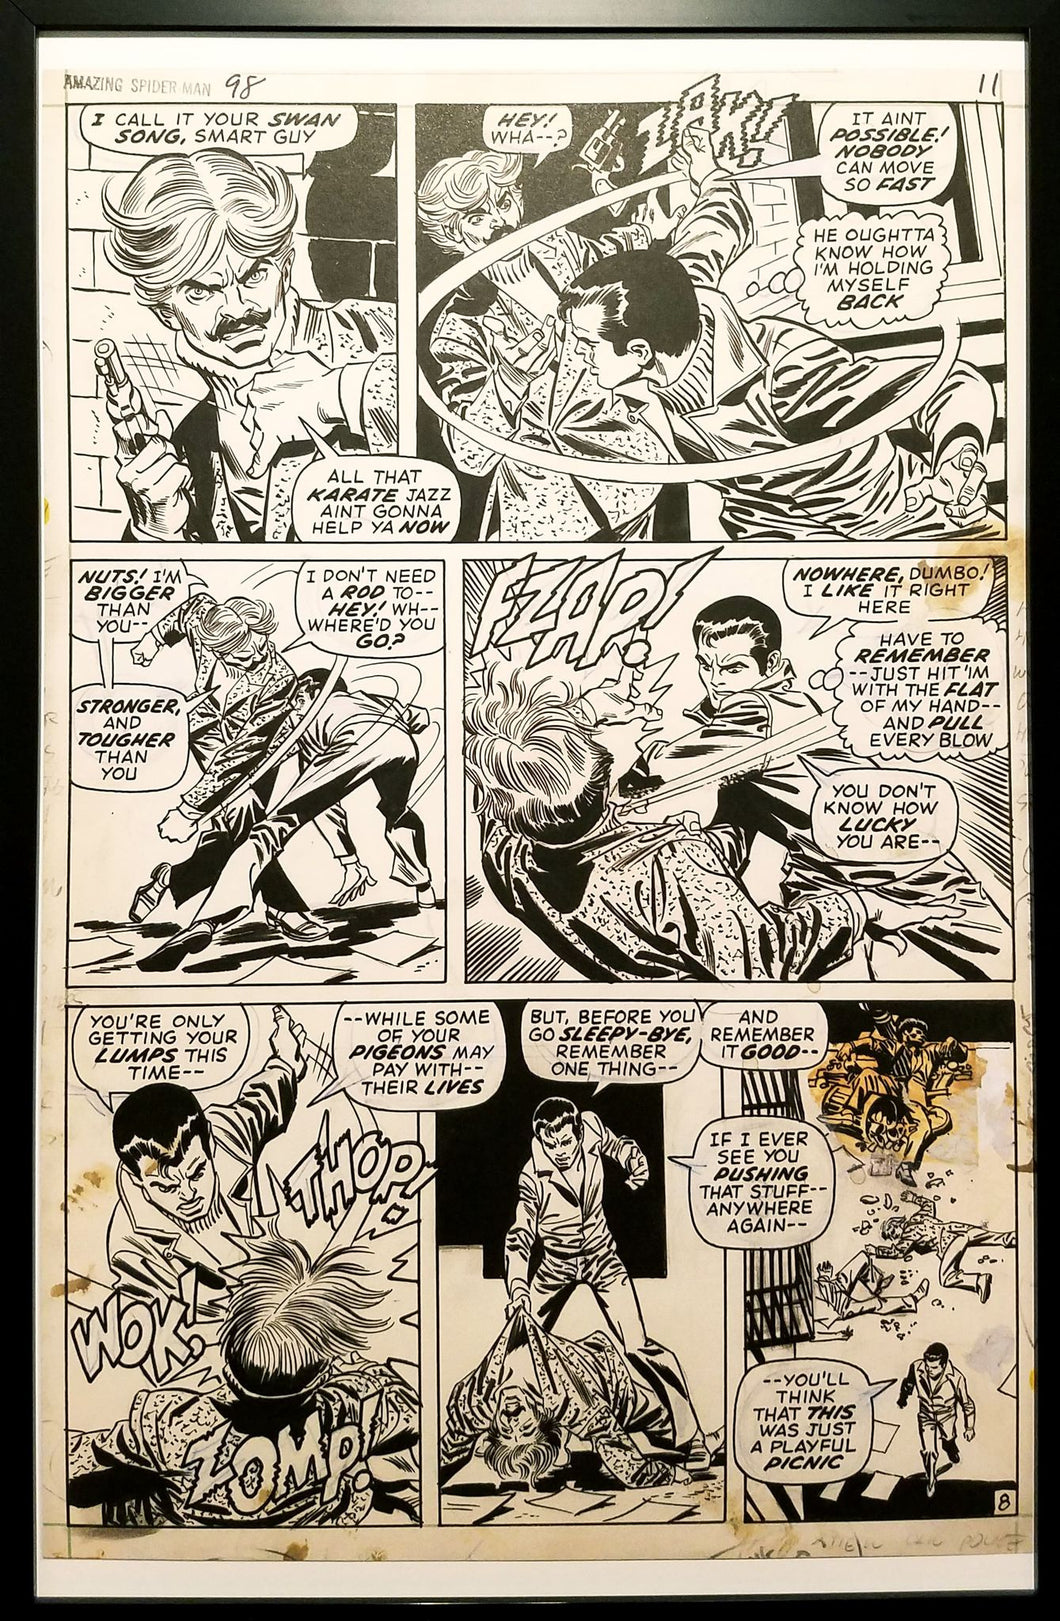 Amazing Spider-Man #98 pg. 8 Gil Kane 11x17 FRAMED Original Art Poster Marvel Comics